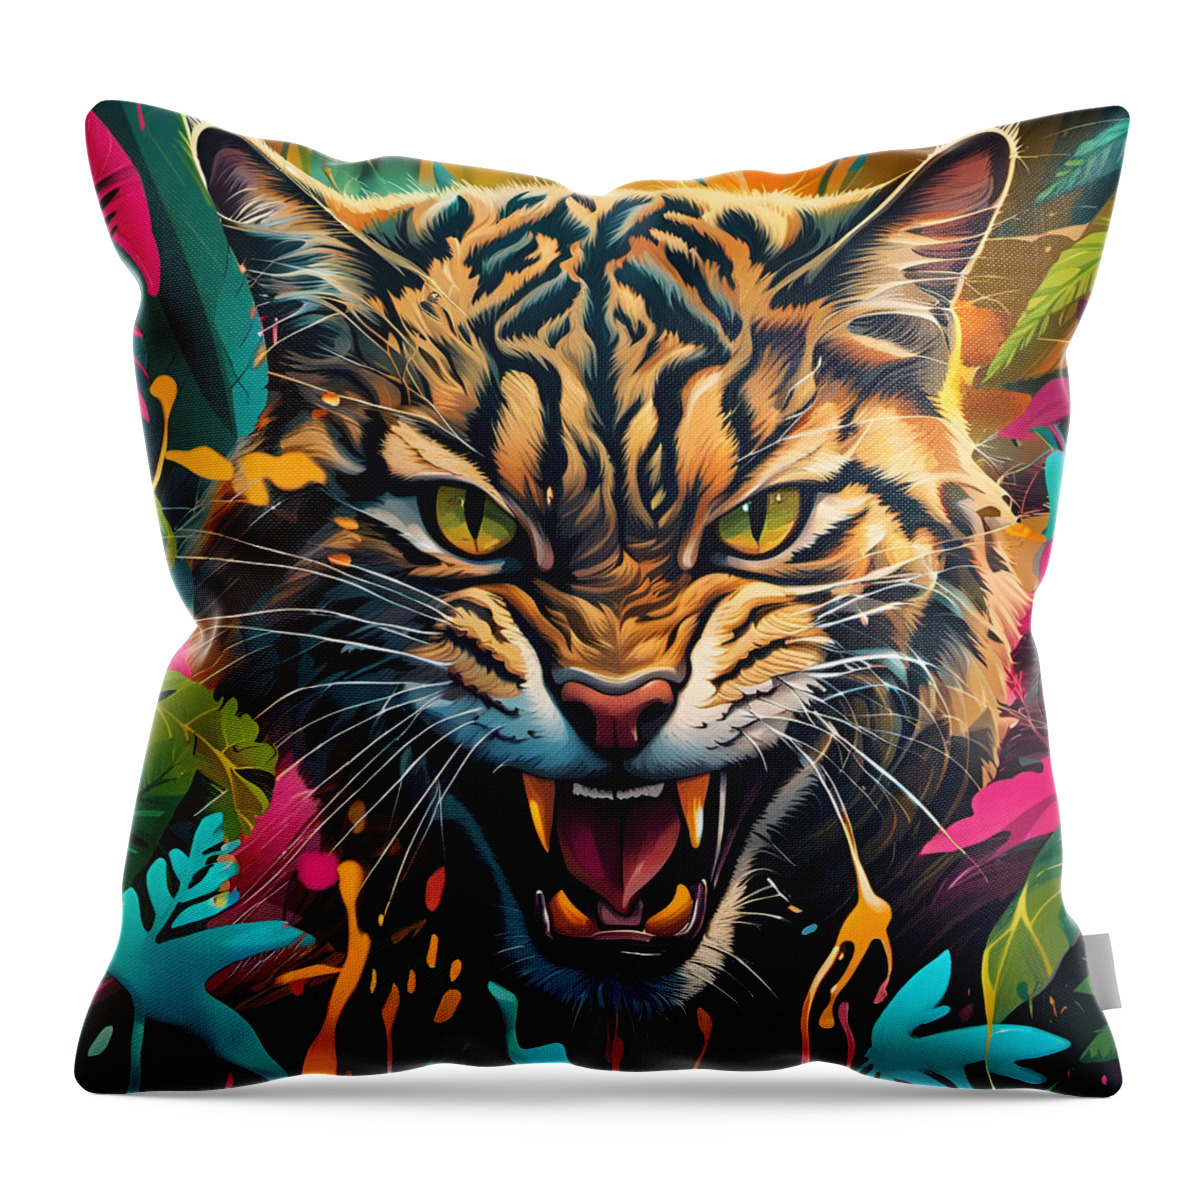 Wild Throw Pillow featuring the digital art Wild Cat by Jason Denis